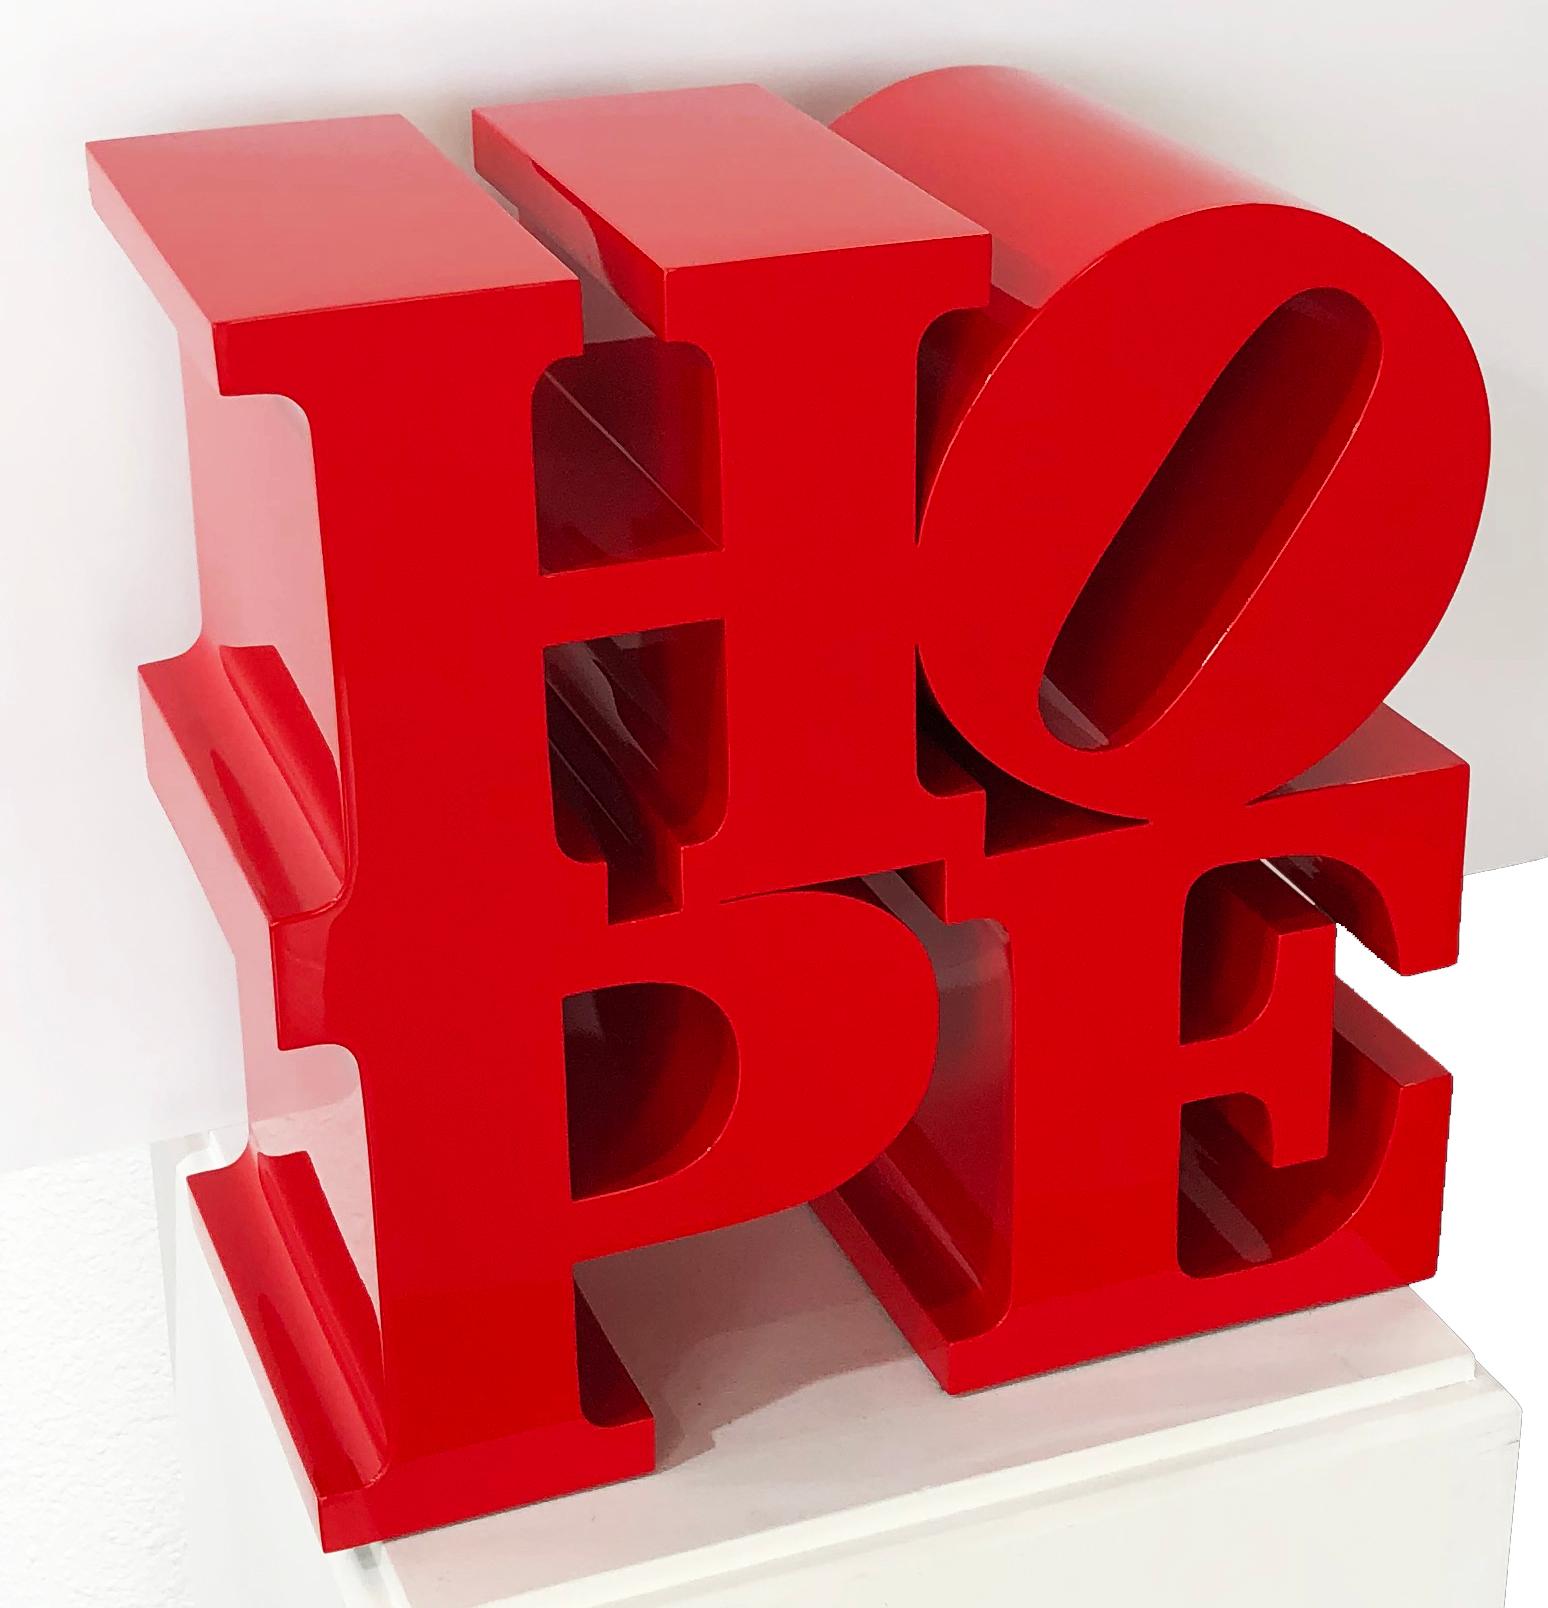 Robert Indiana Figurative Sculpture - HOPE (RED) SCULPTURE